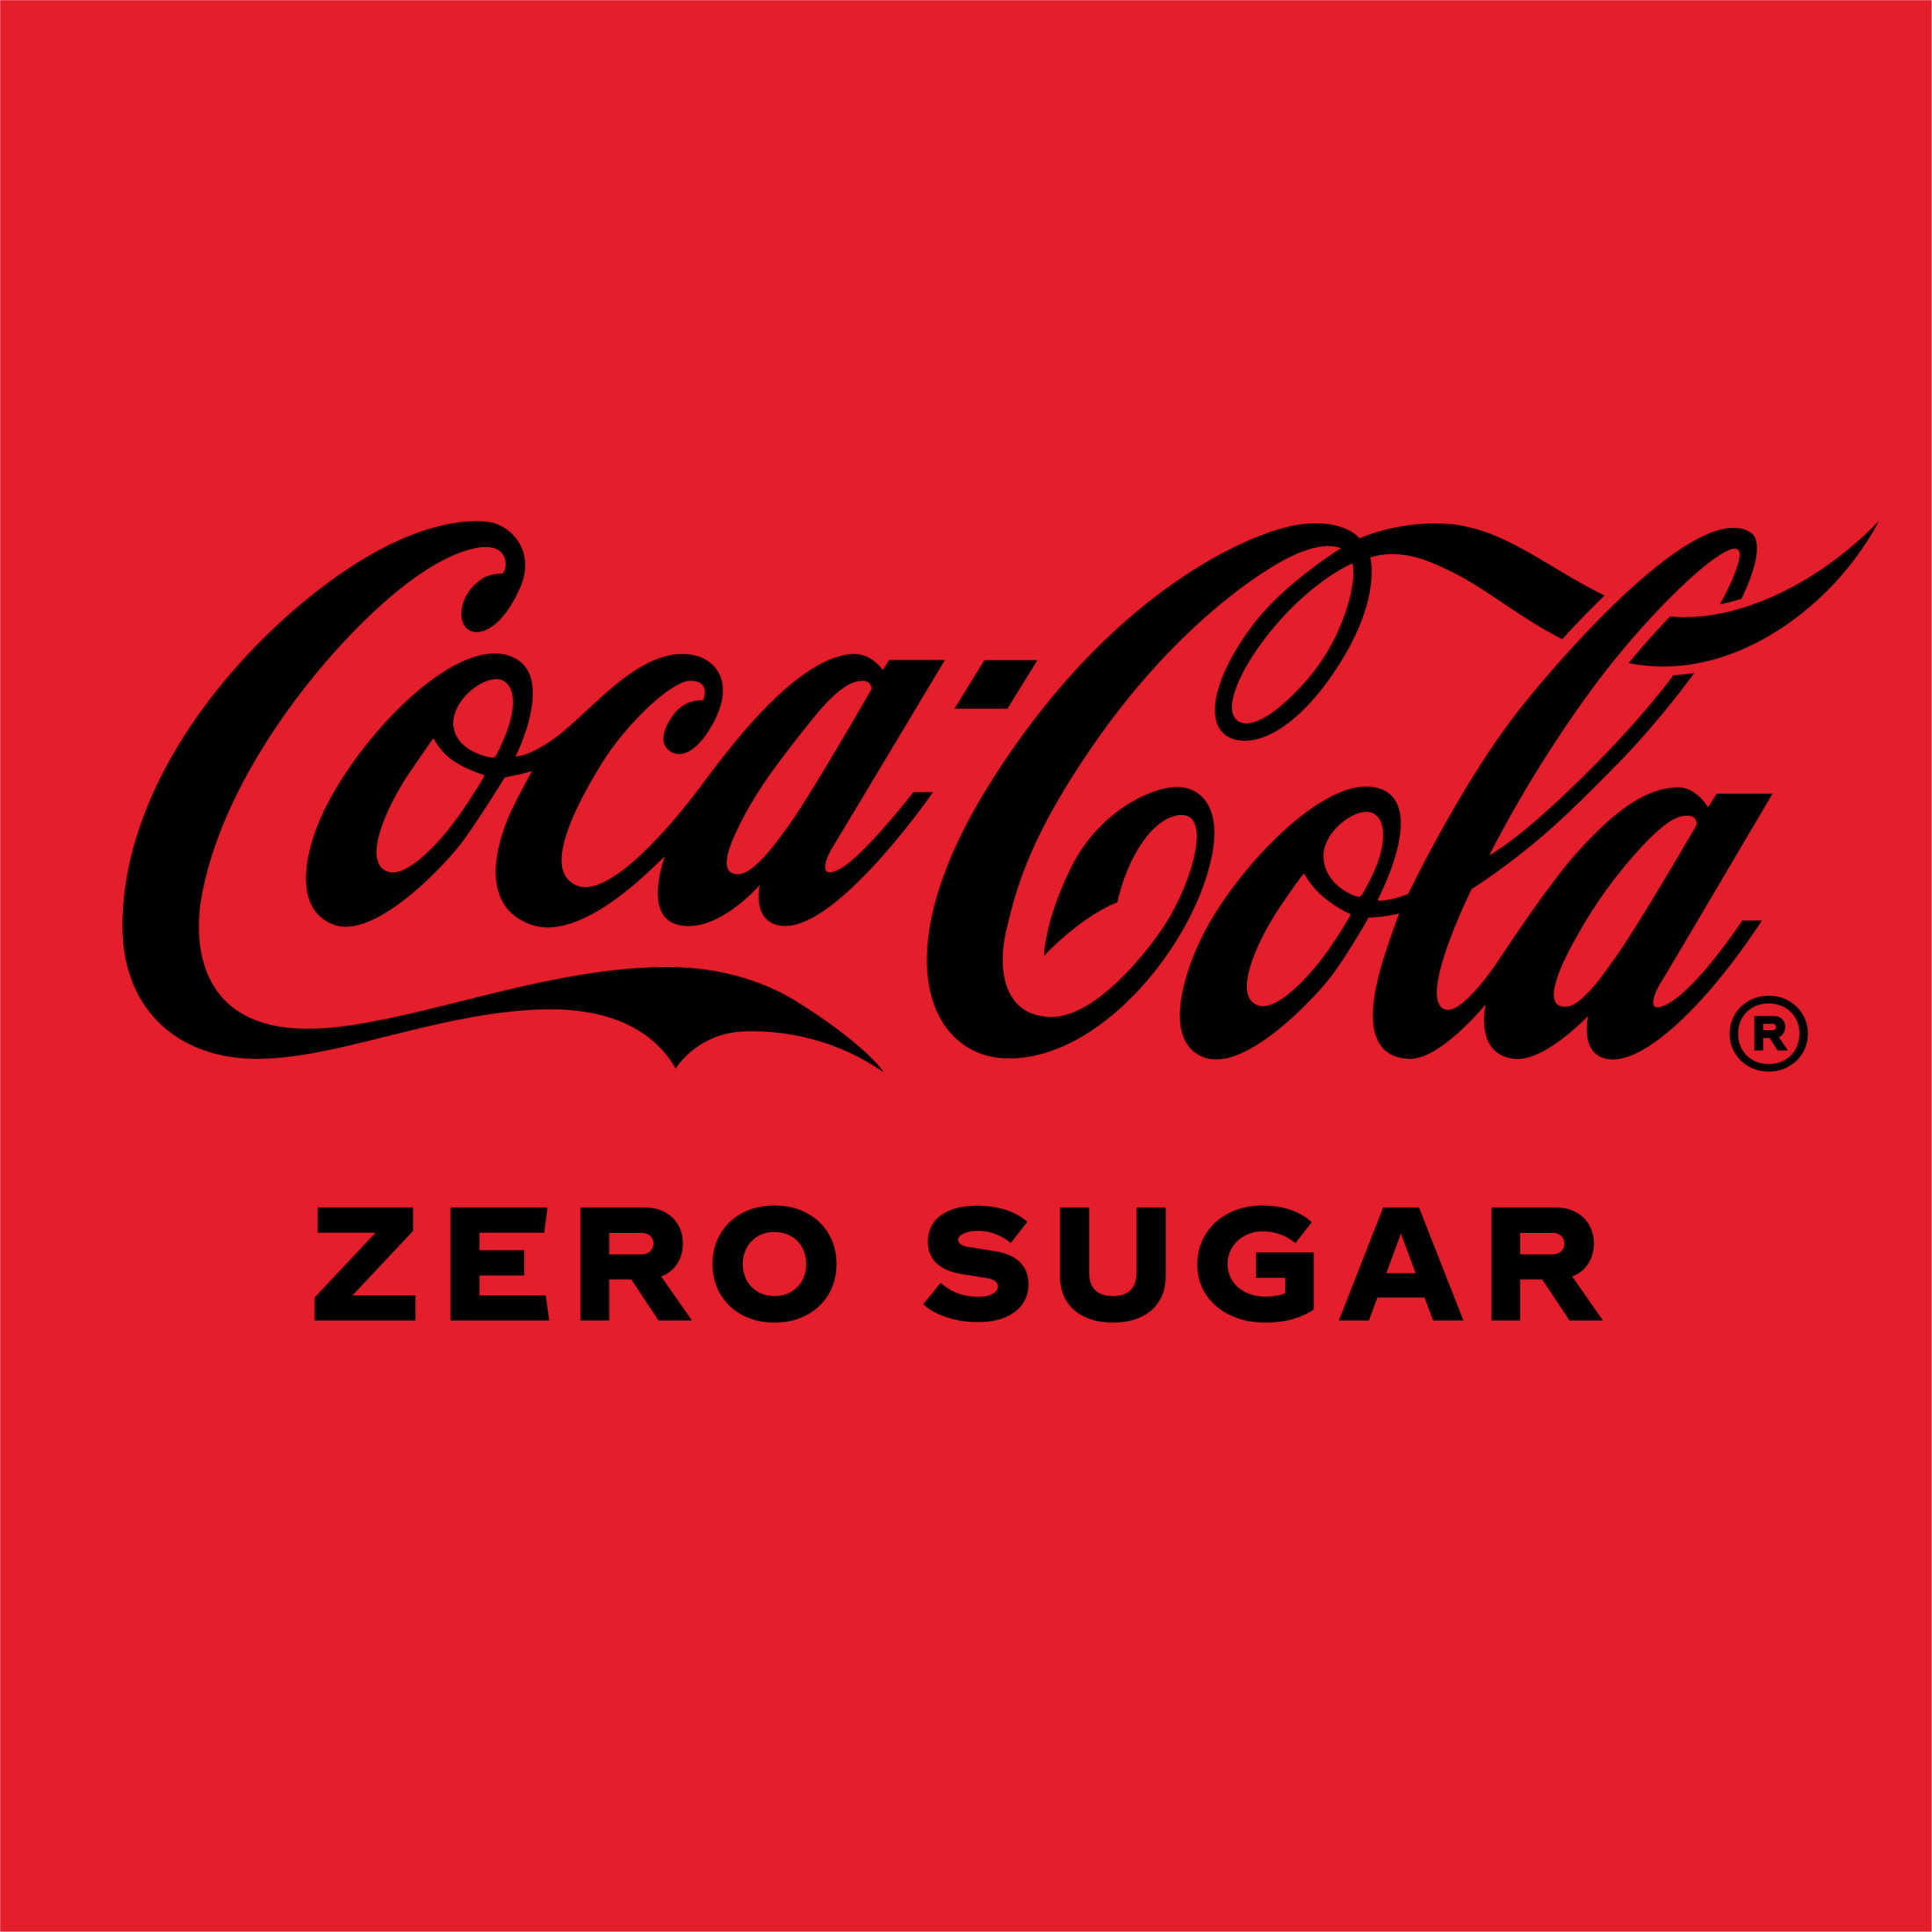 Coca-Cola Zero Sugar Sugar-Free Soda Pop, 16.9 fl oz Bottles, 6 Pack - image 2 of 8